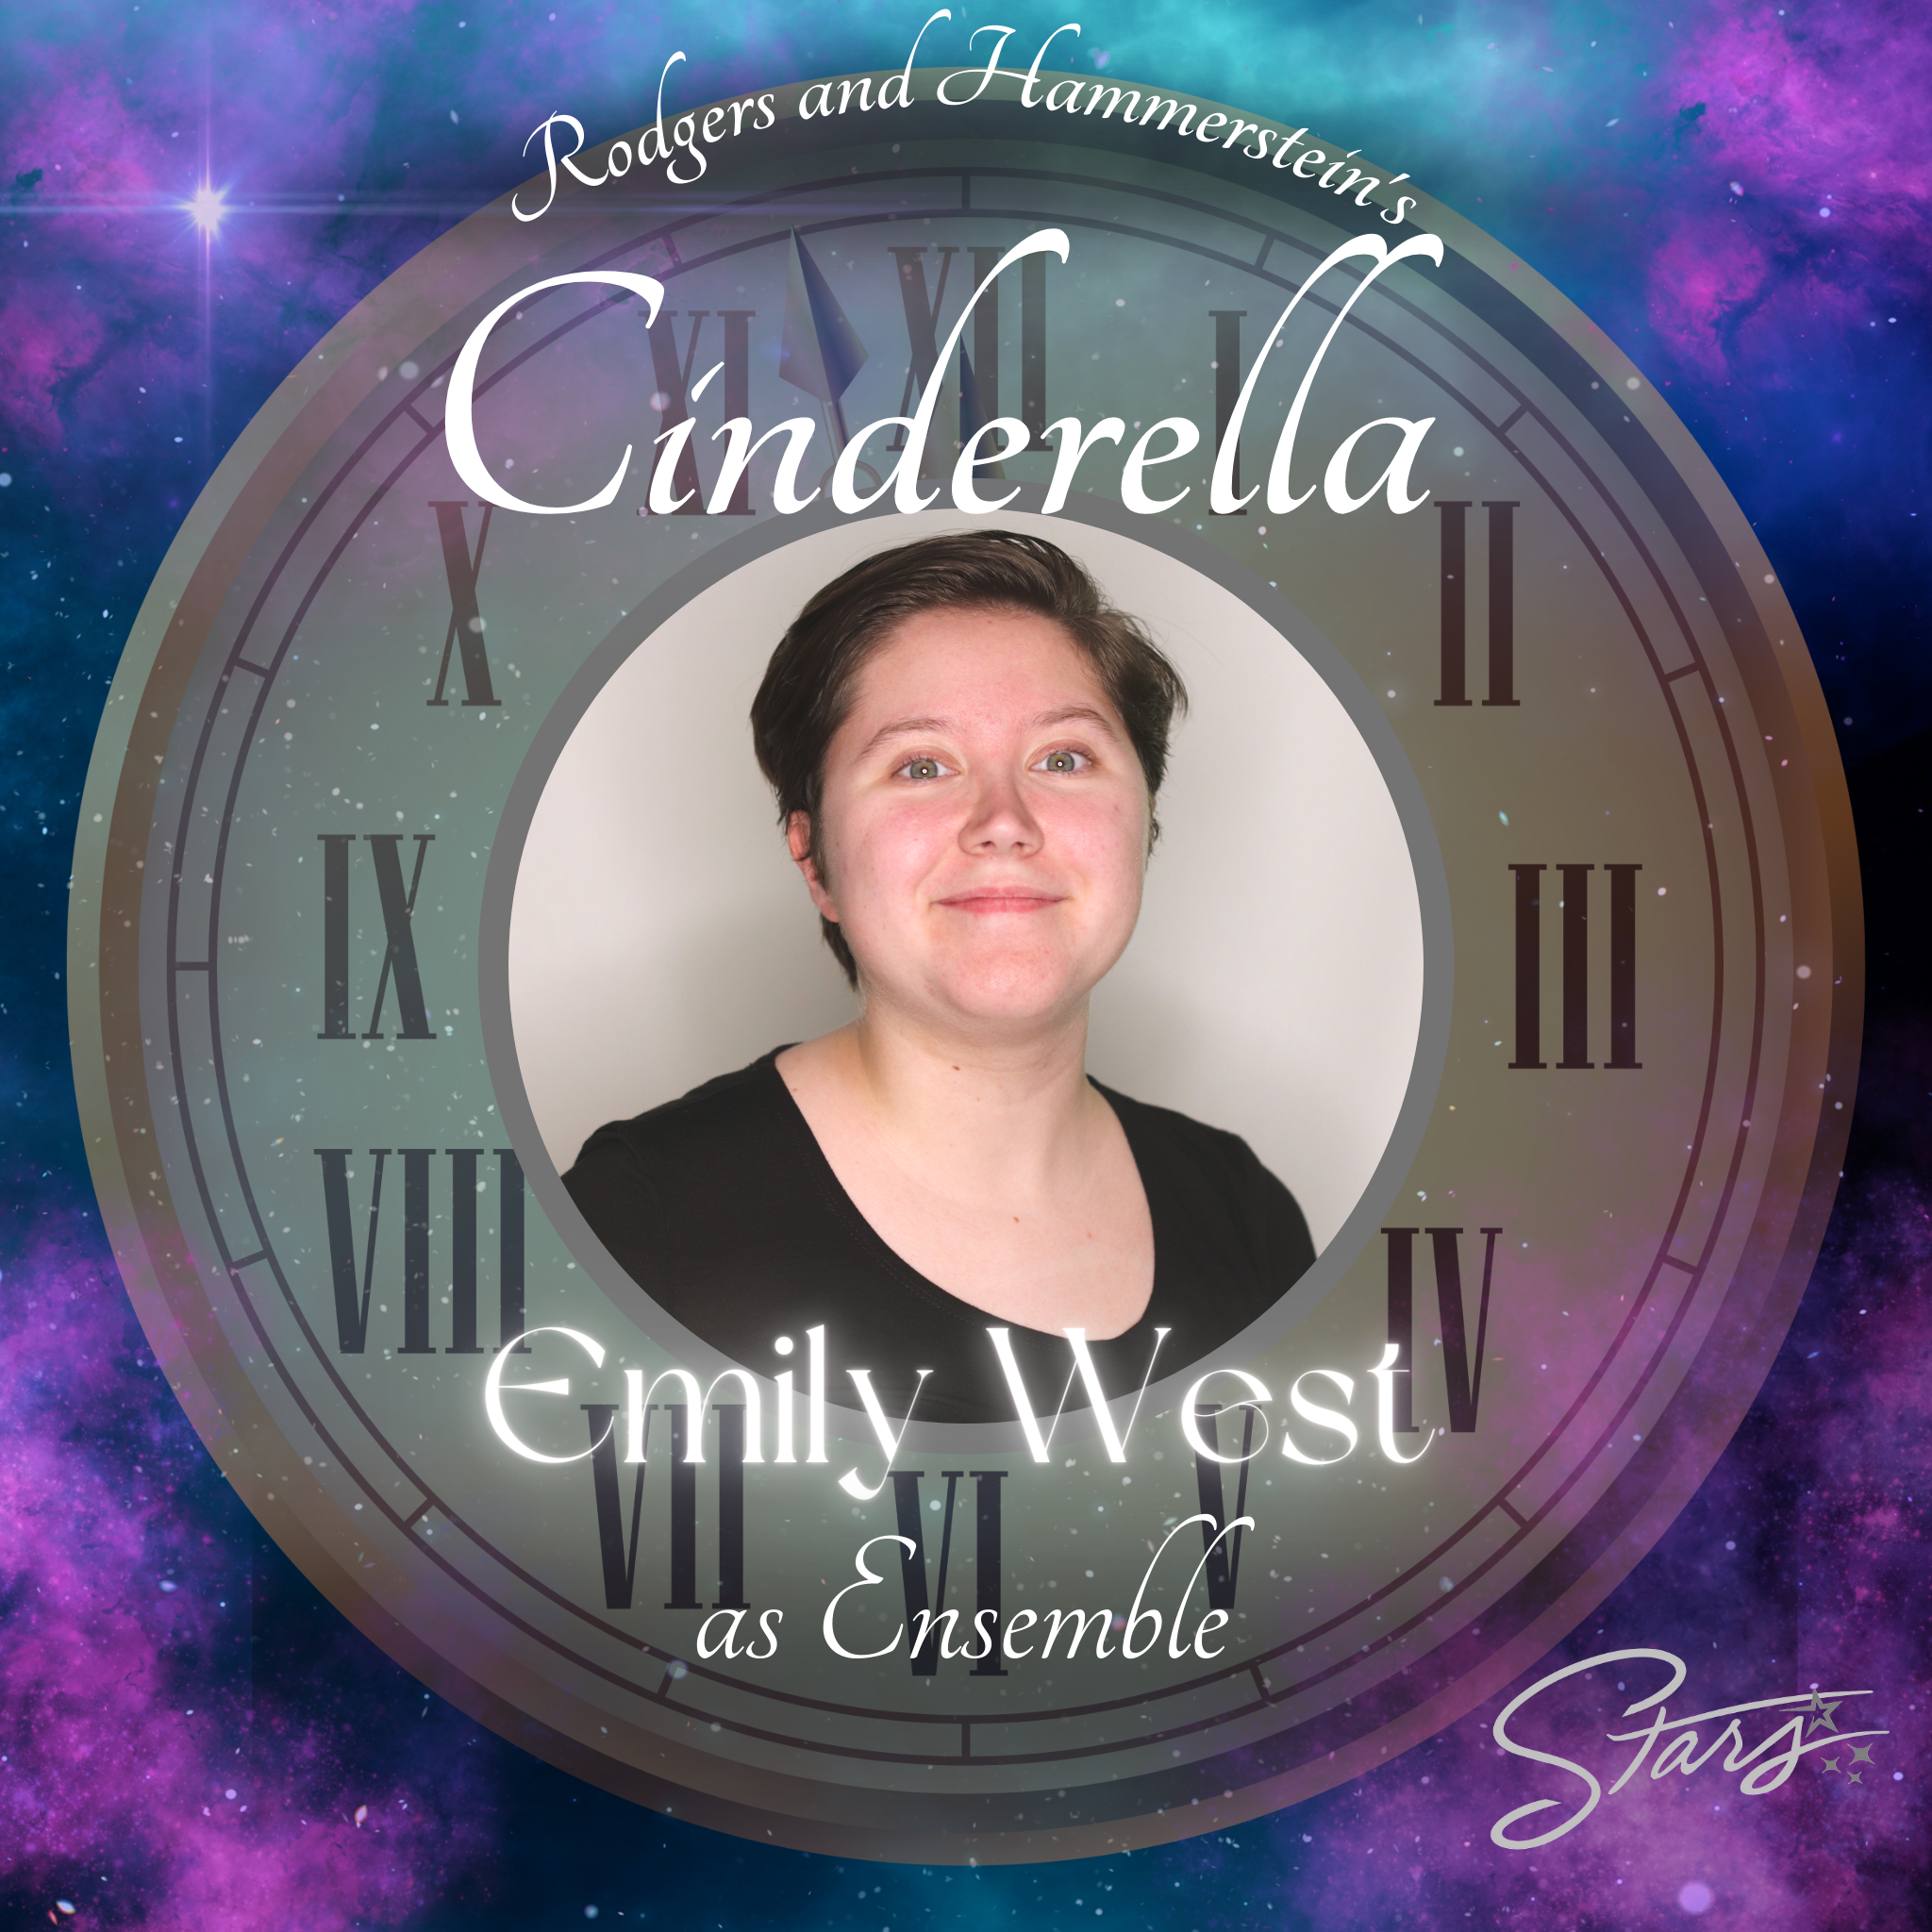 Emily West as Ensemble in Cinderella